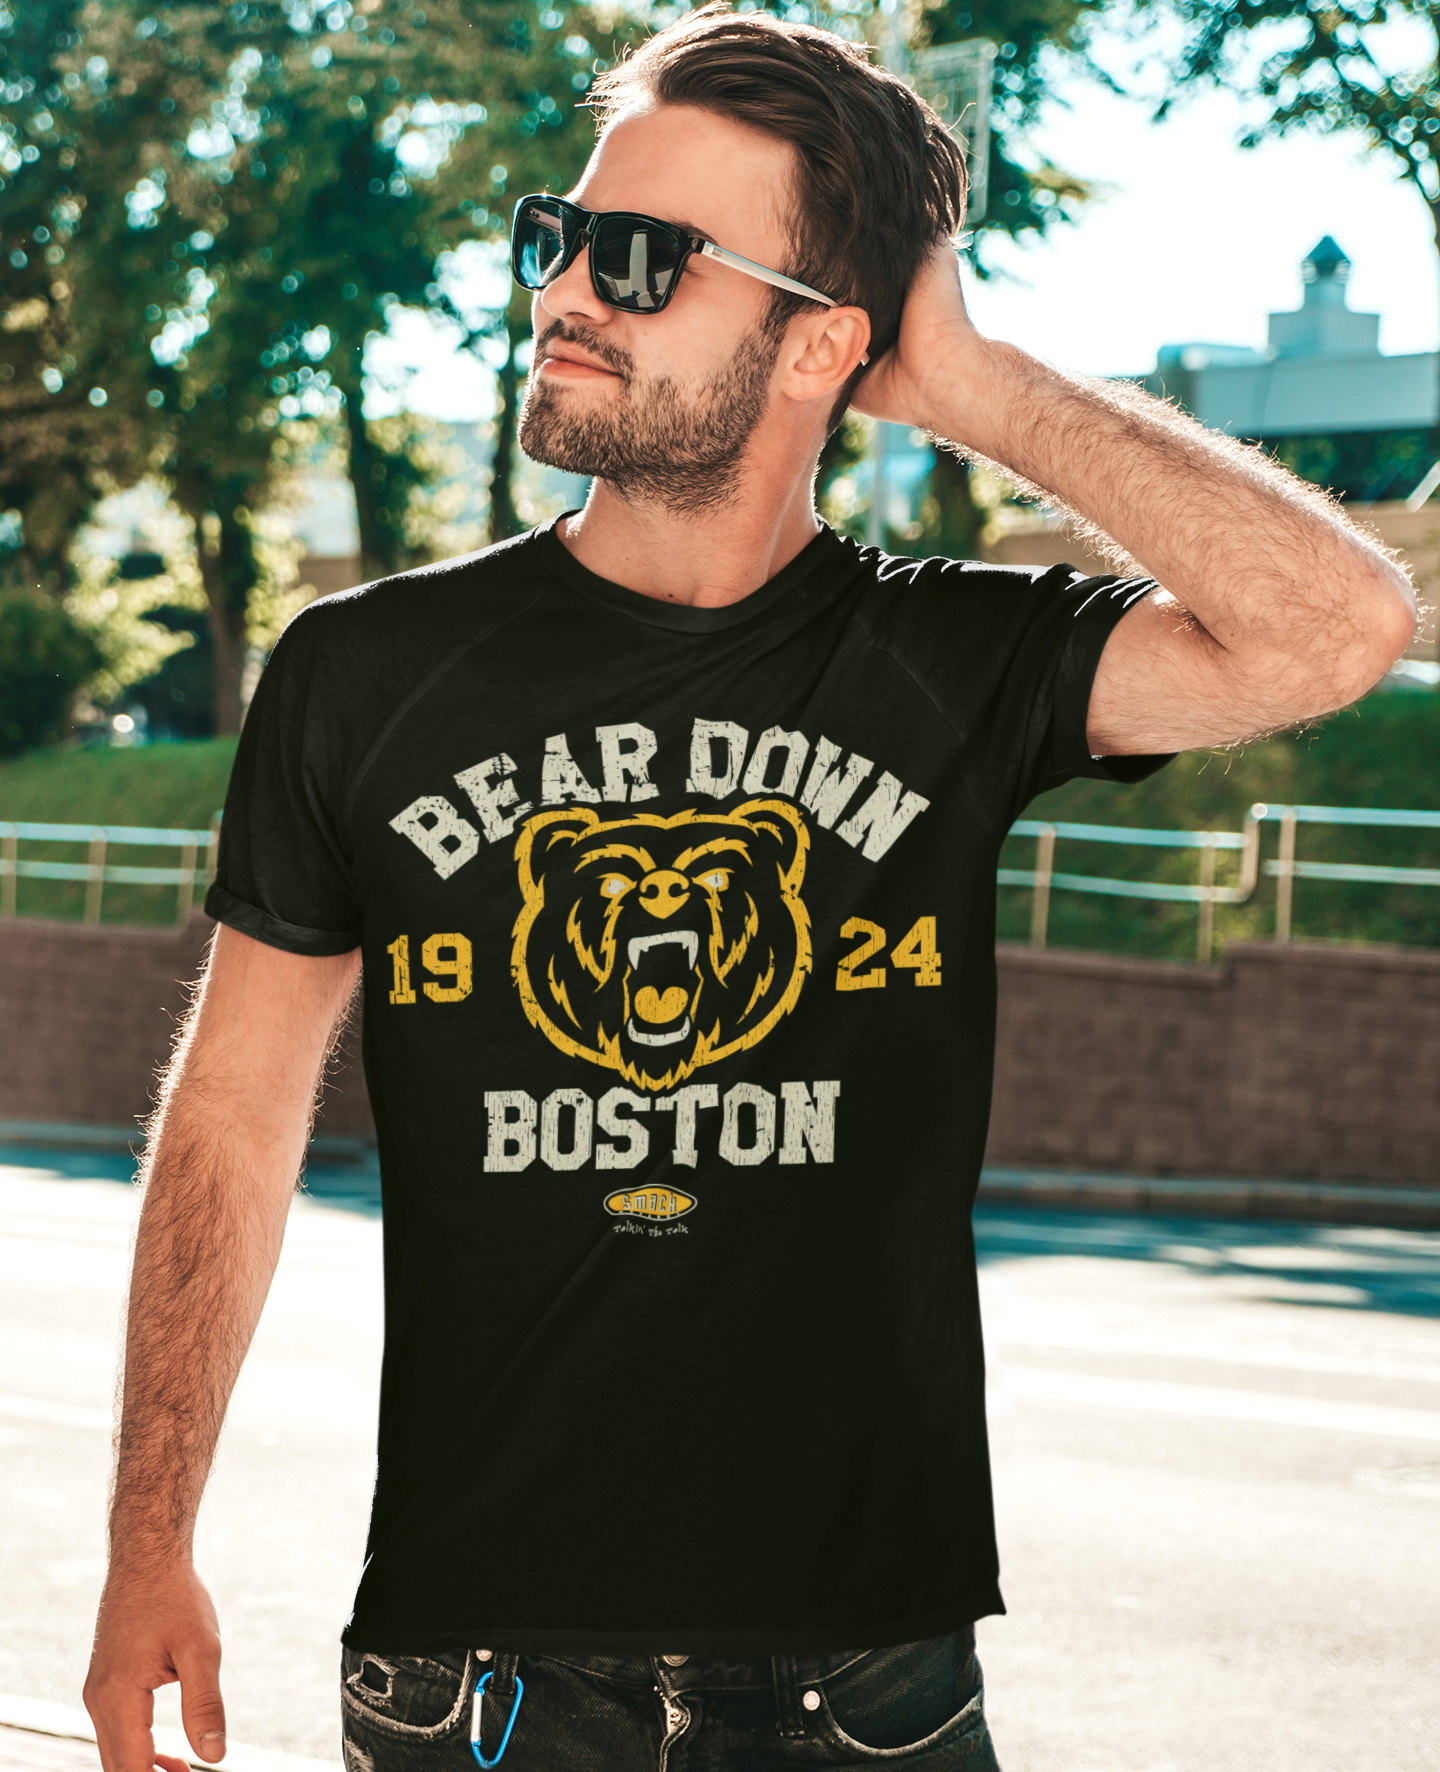 Boston Bruins Don't Poke the Bear shirt - Limotees